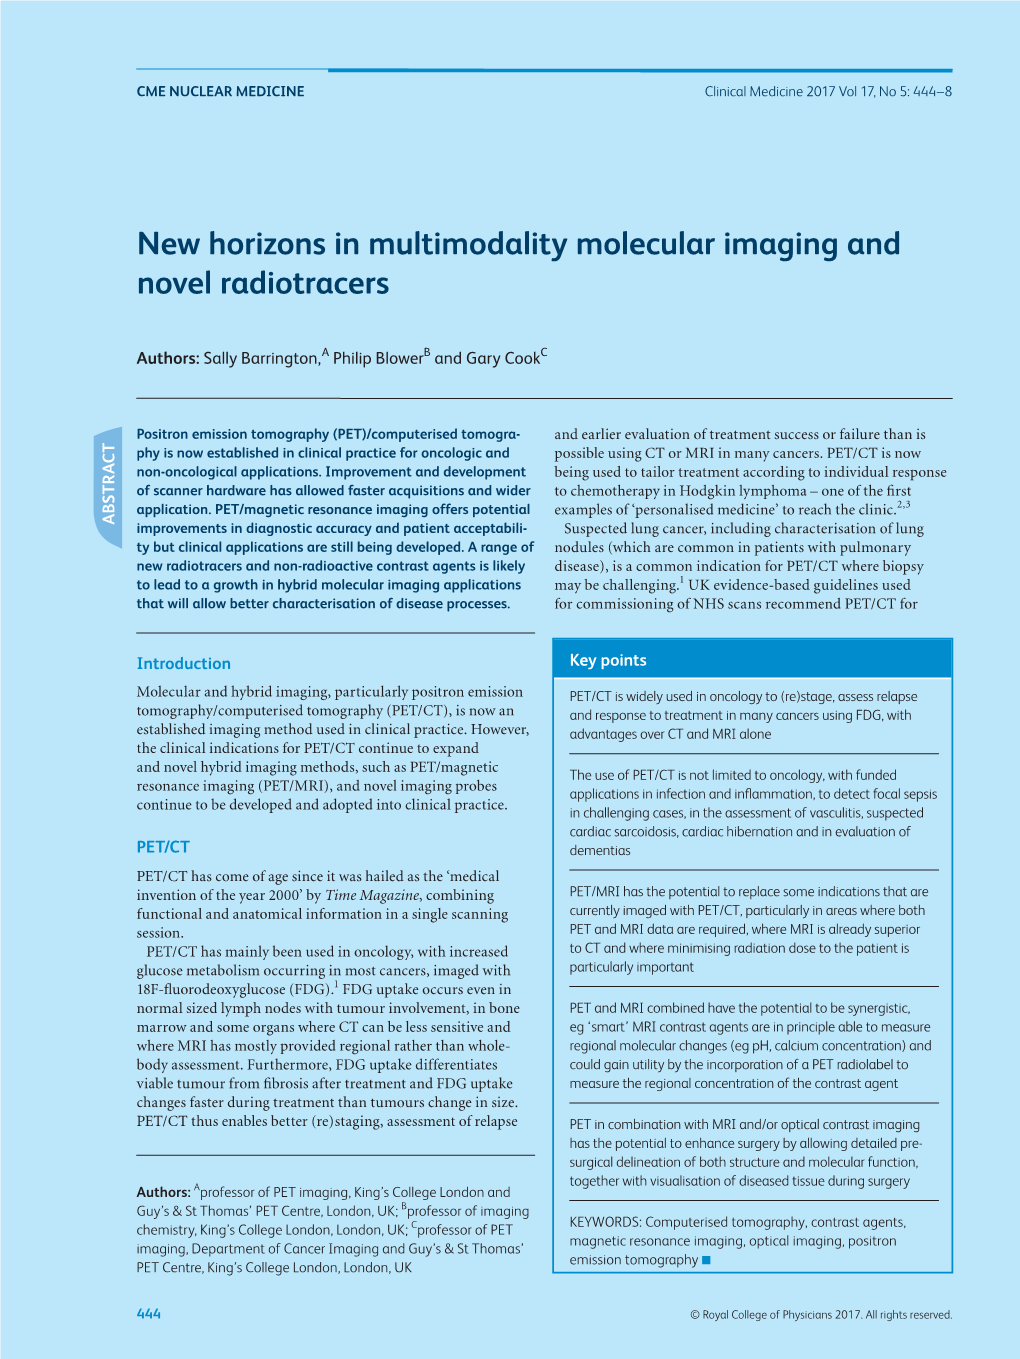 New Horizons in Multimodality Molecular Imaging and Novel